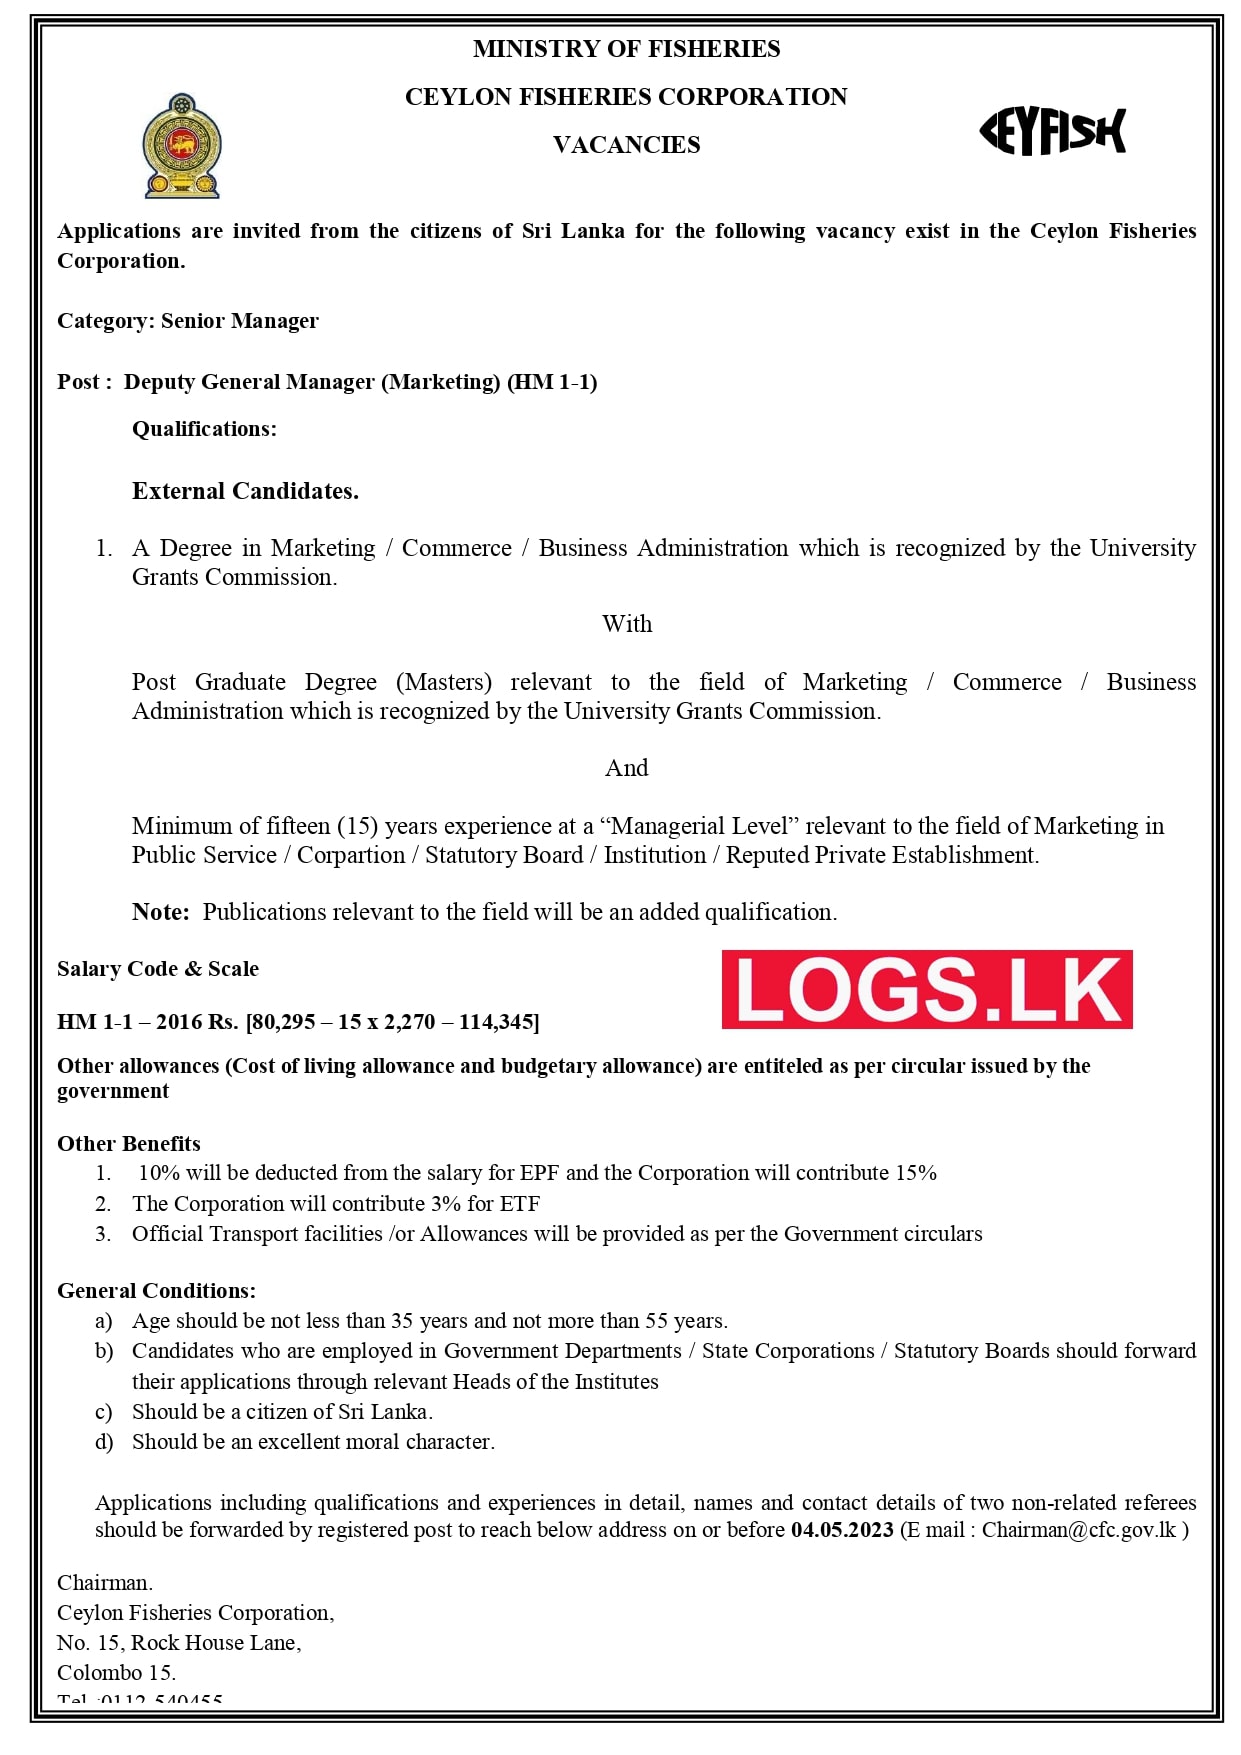 Deputy General Manager (Marketing) - Ceylon Fisheries Corporation Vacancies 2023 Application, Details Download